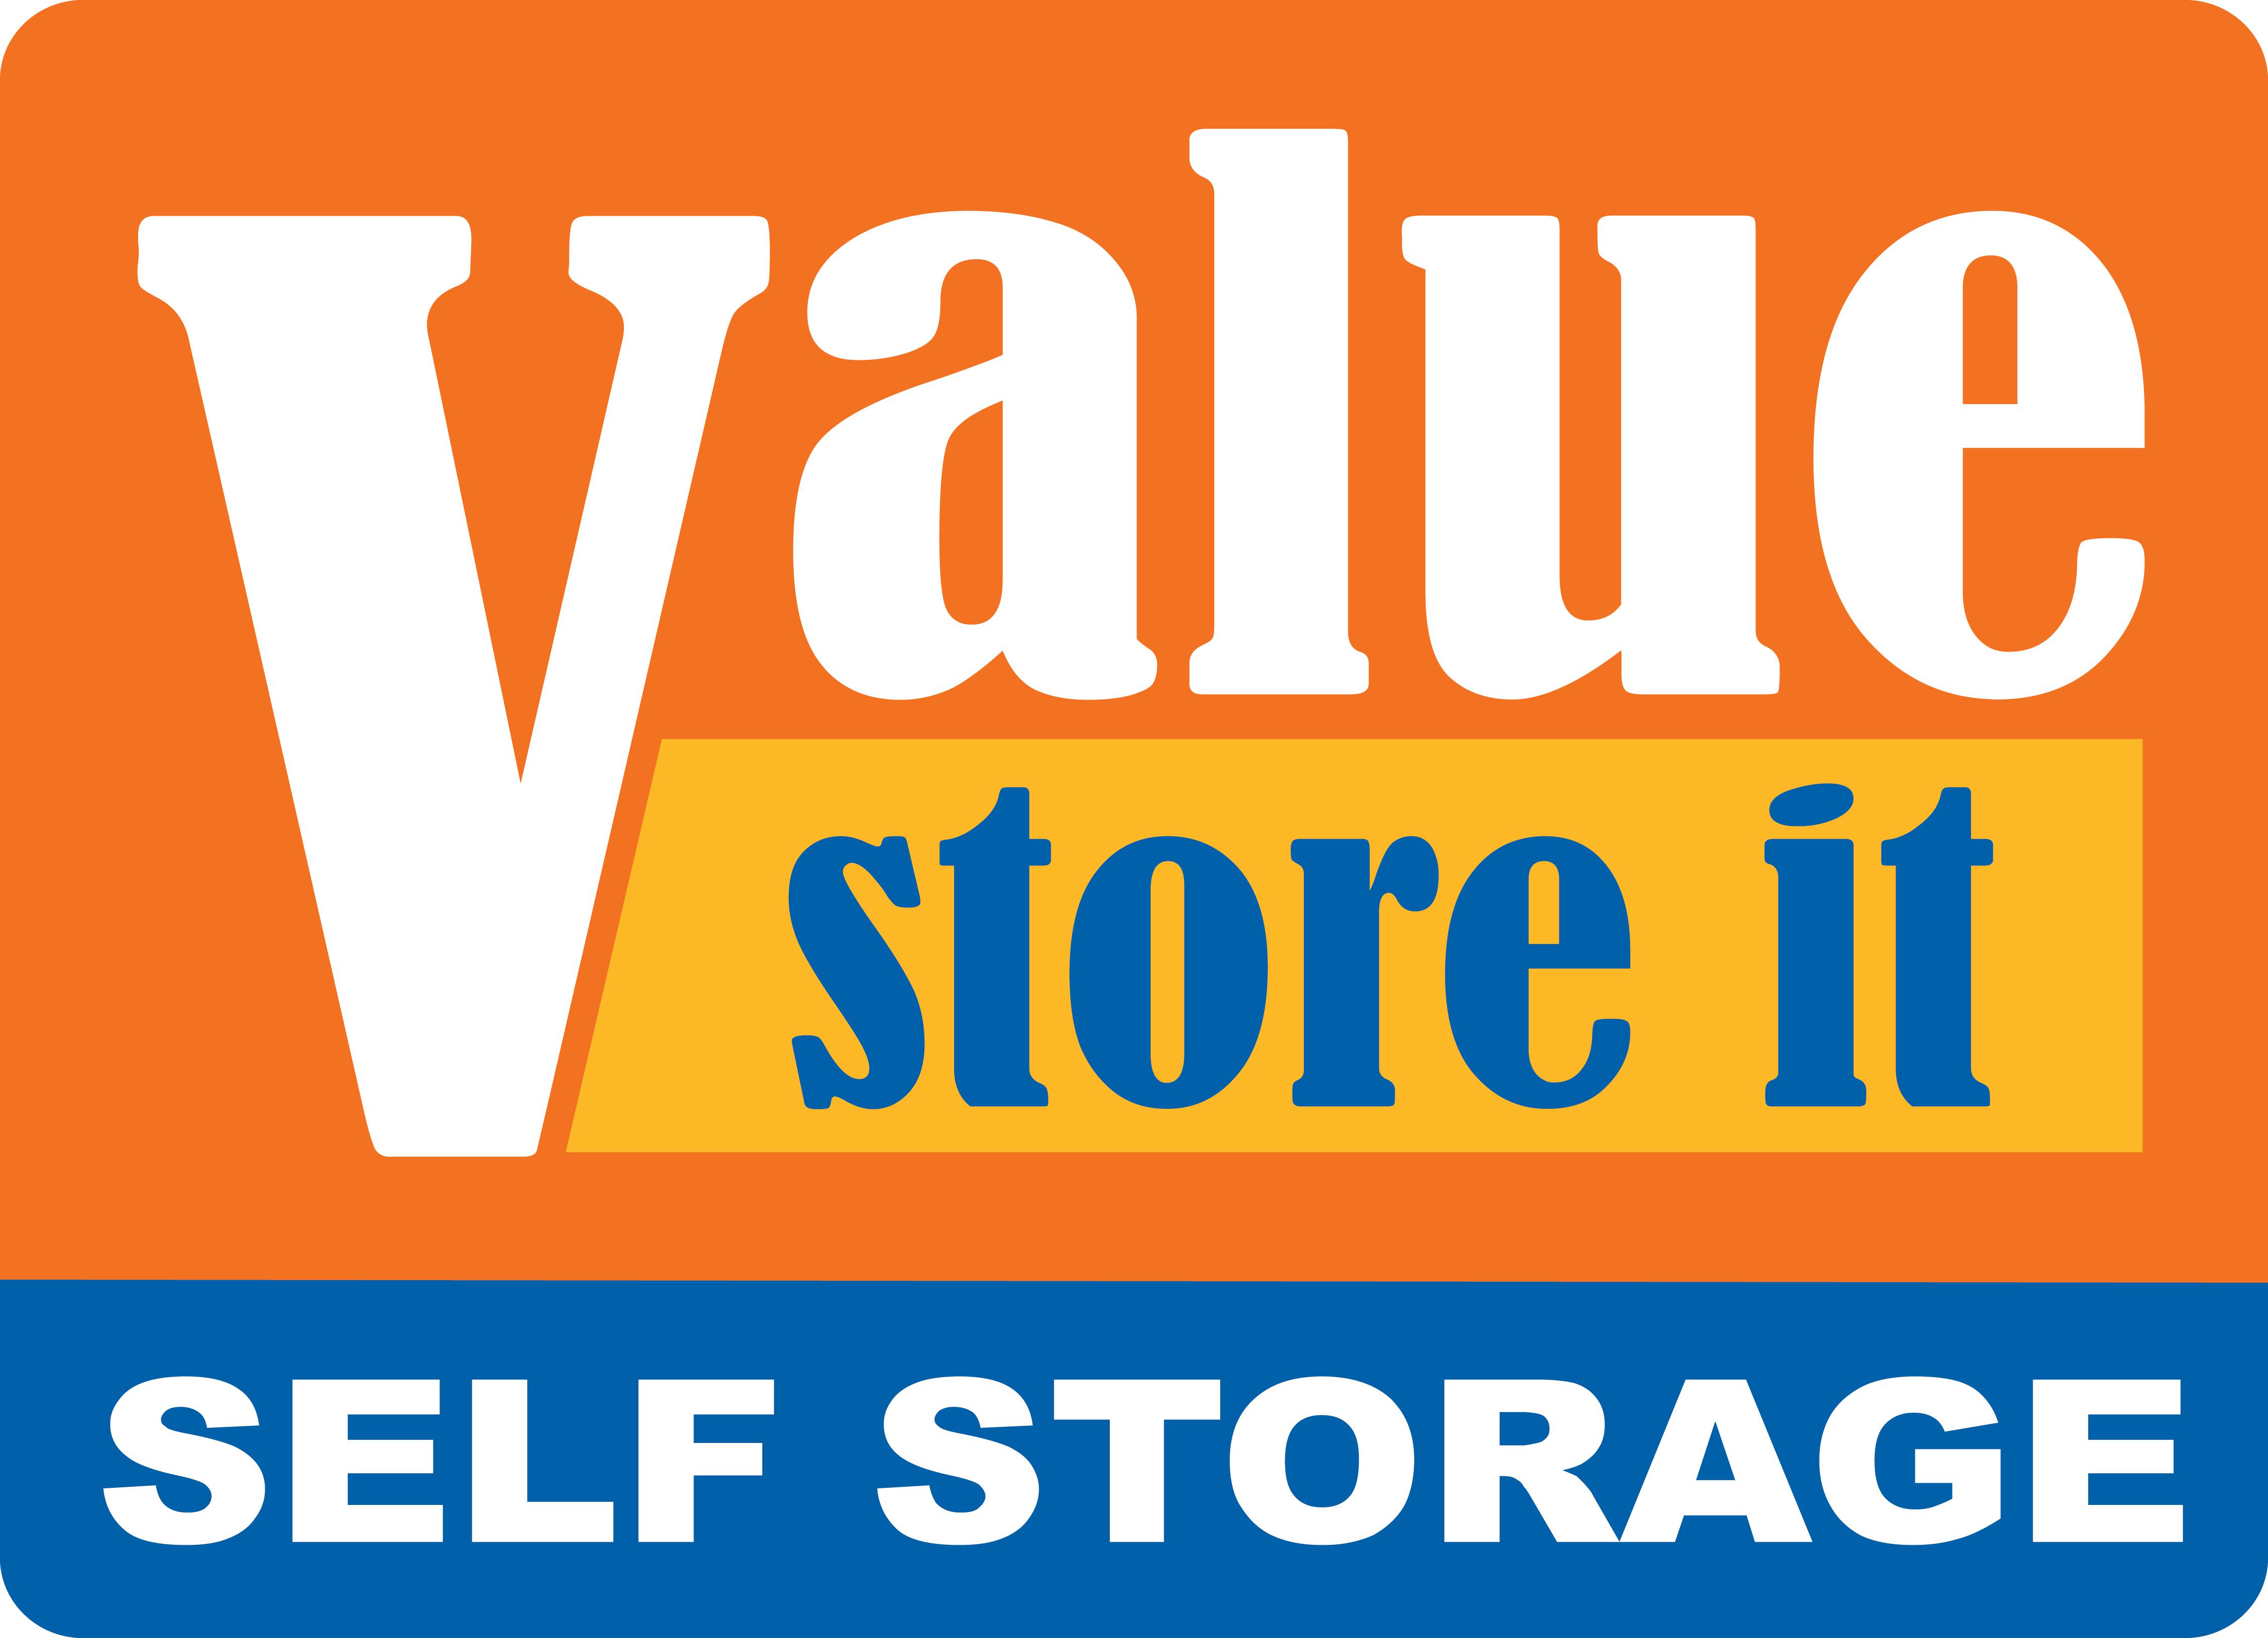 Value Store It Self Storage Photo